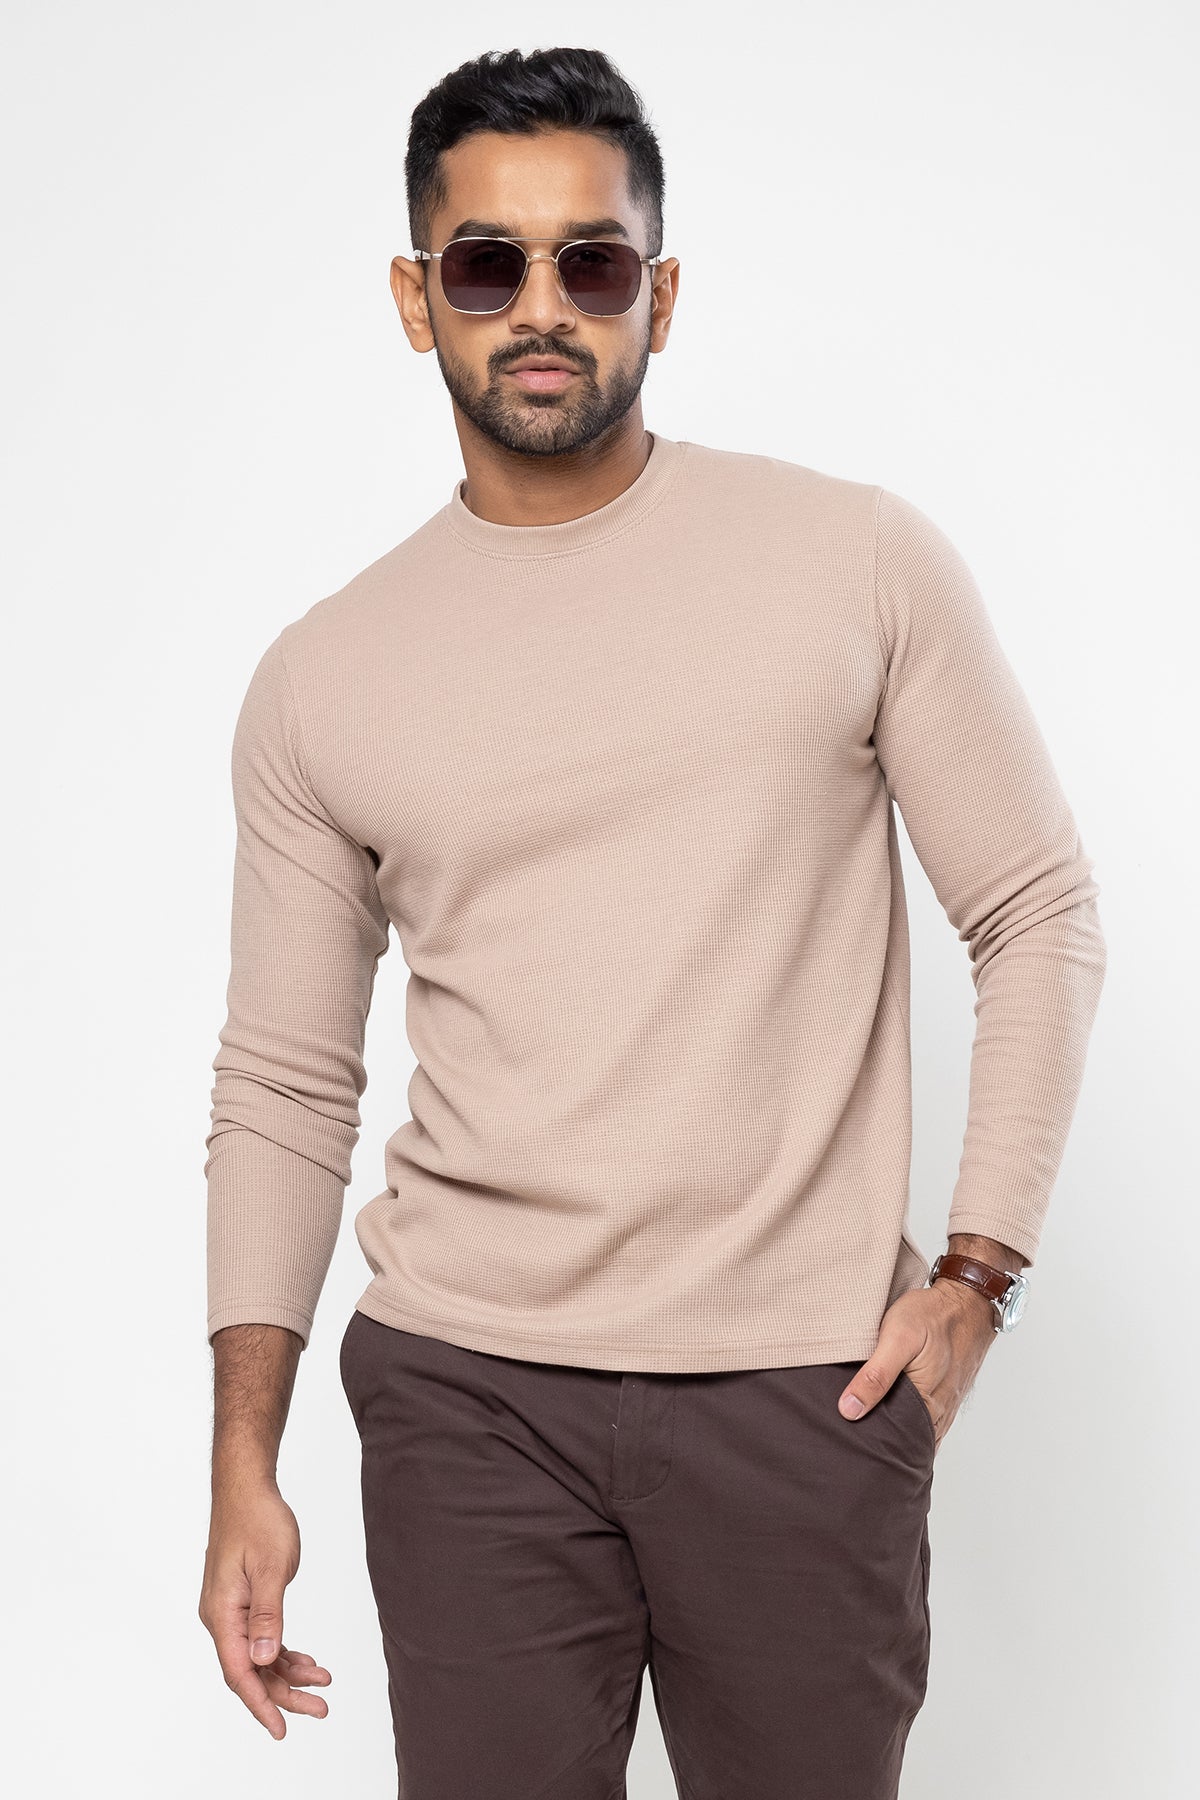 King Street Men's Long Sleeve Casual Sweater